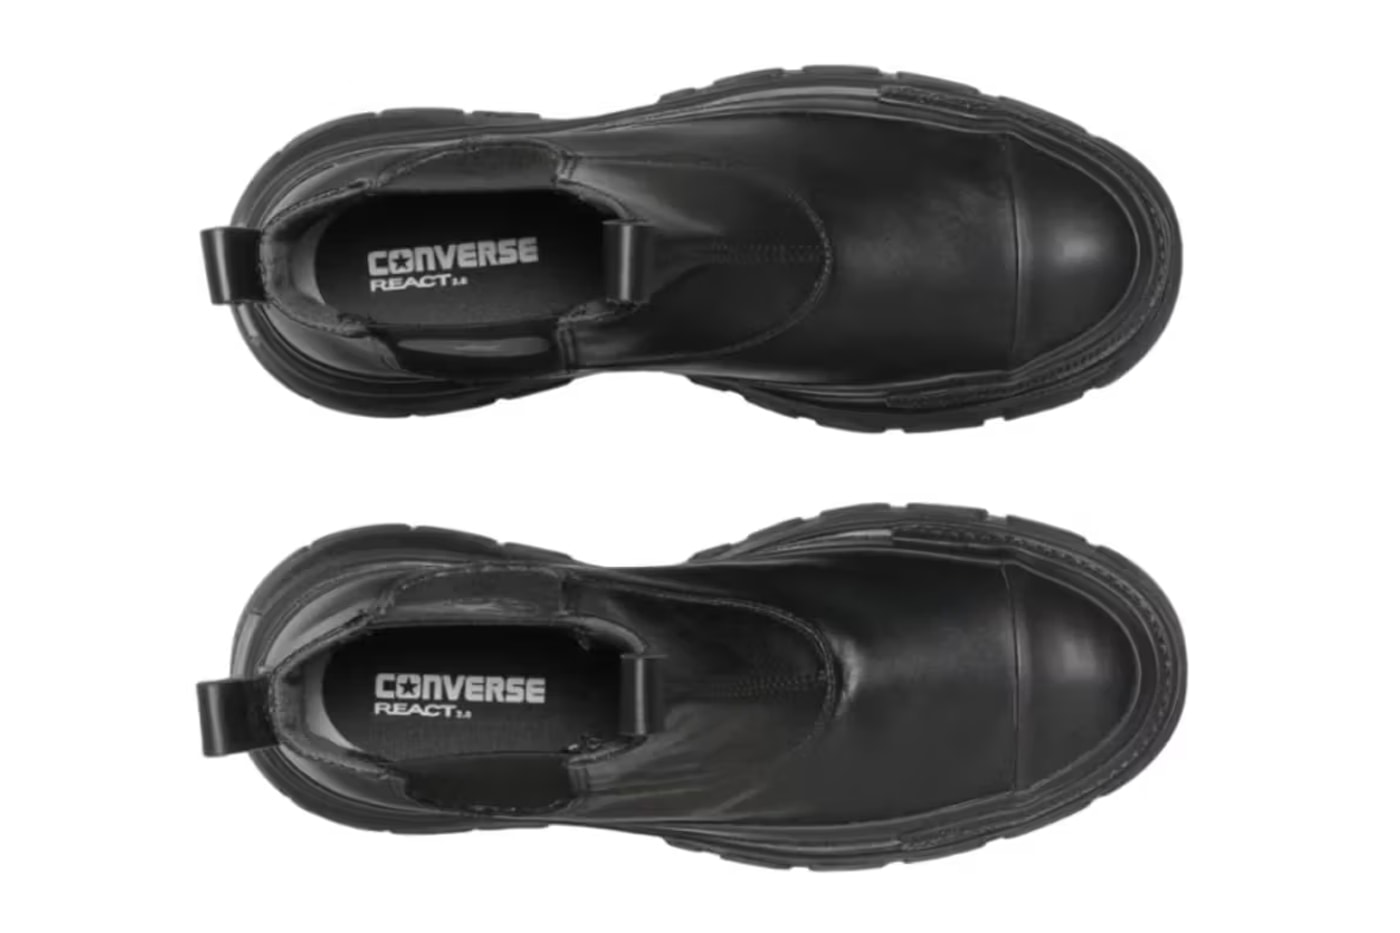 converse all star trek wave boot sneaker chelsea design new shoe release details chunky wavy platform sole leather black